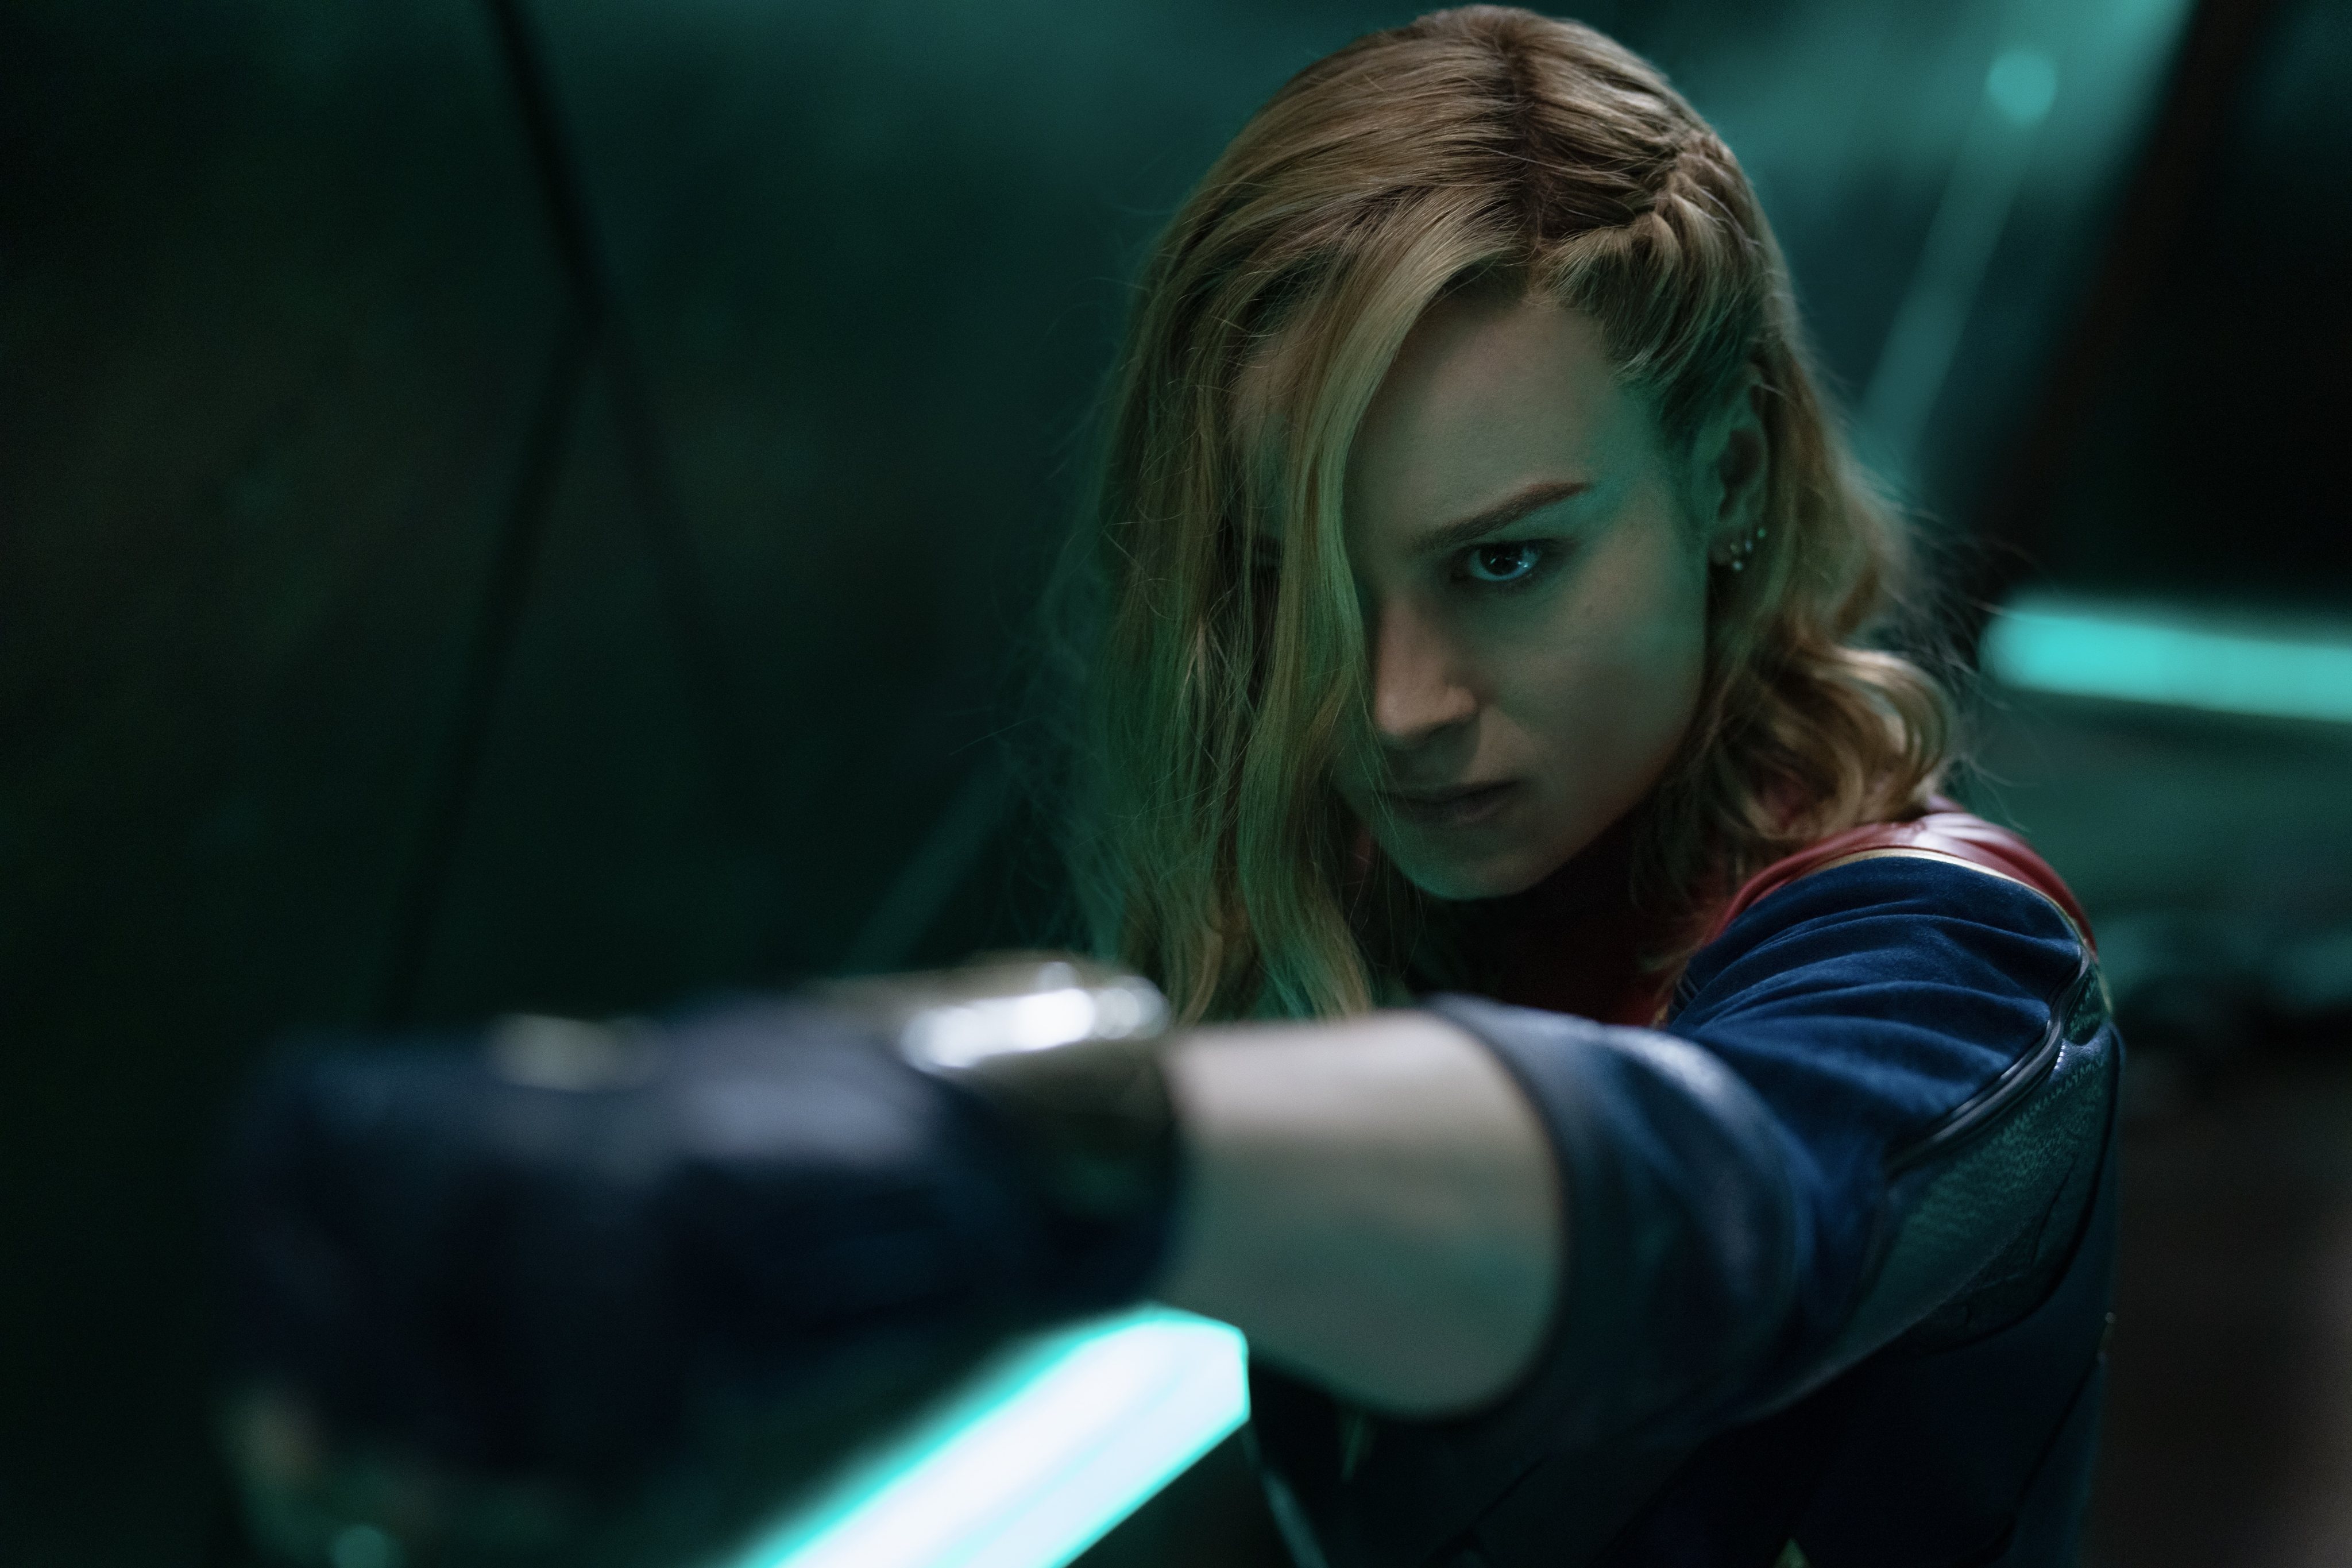 Brie Larson as Captain Marvel/Carol Danvers in a still from “The Marvels”. Photo: Laura Radford/Marvel